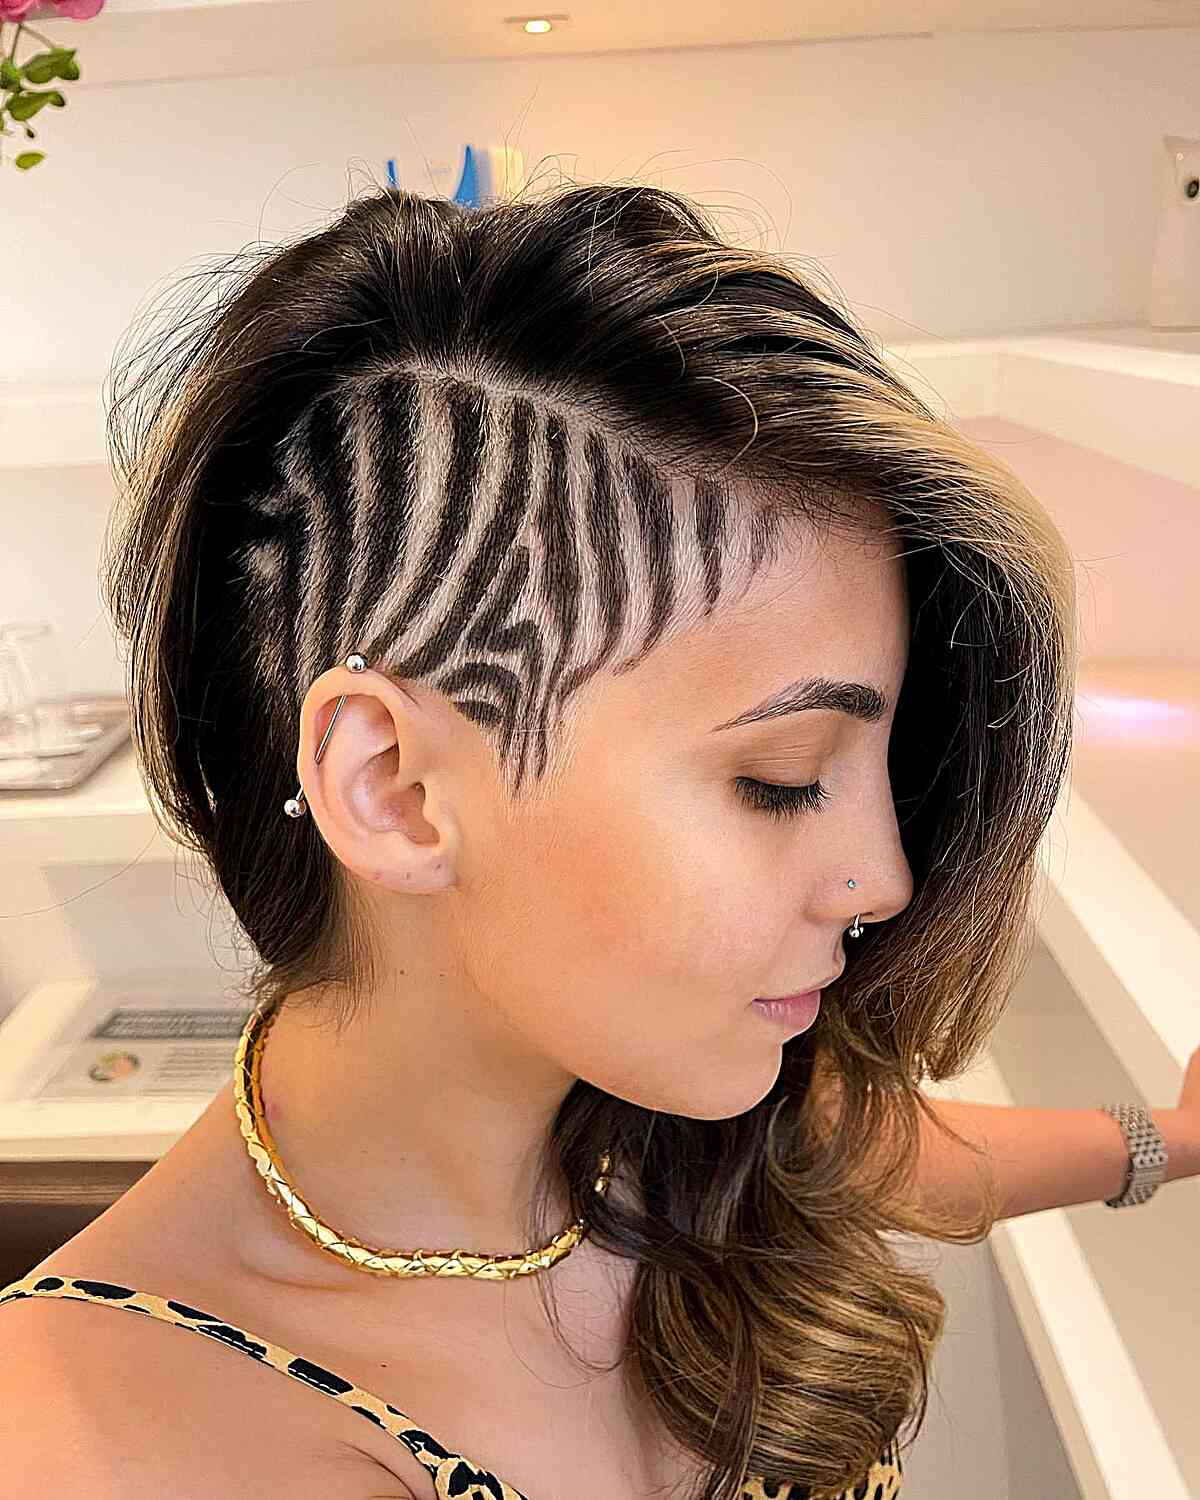 Undercut Long Hair with Amazing Zebra stripe Hair Design on the side